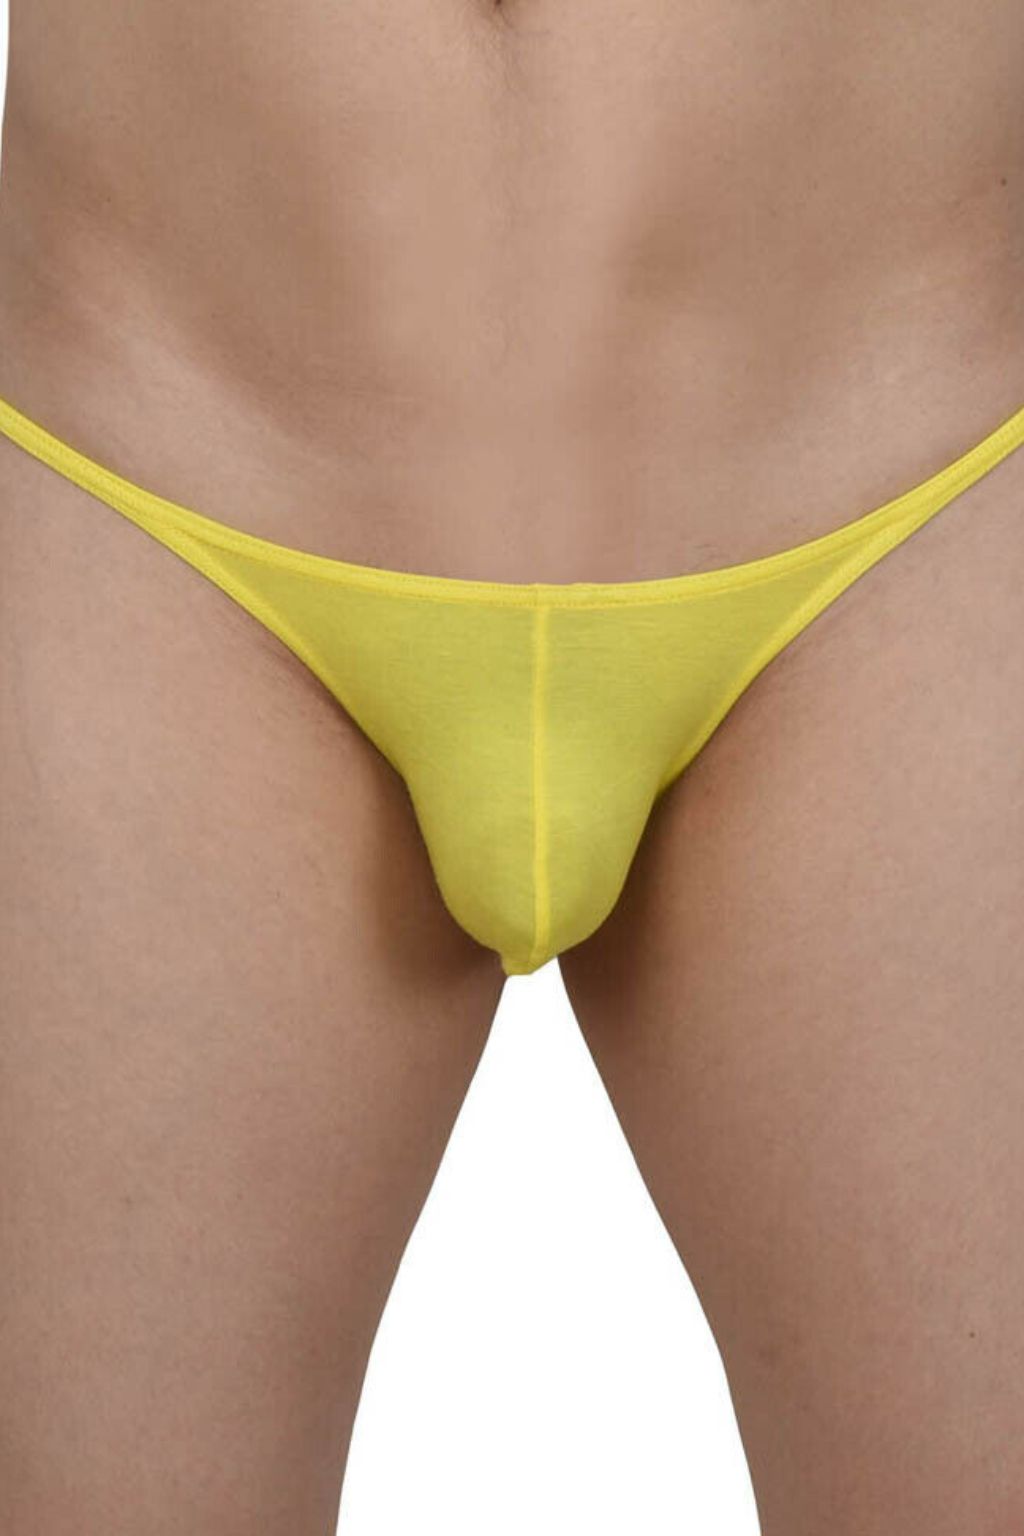 ASOS men Ochre yellow cotton stretch G-string Thong underwear size M